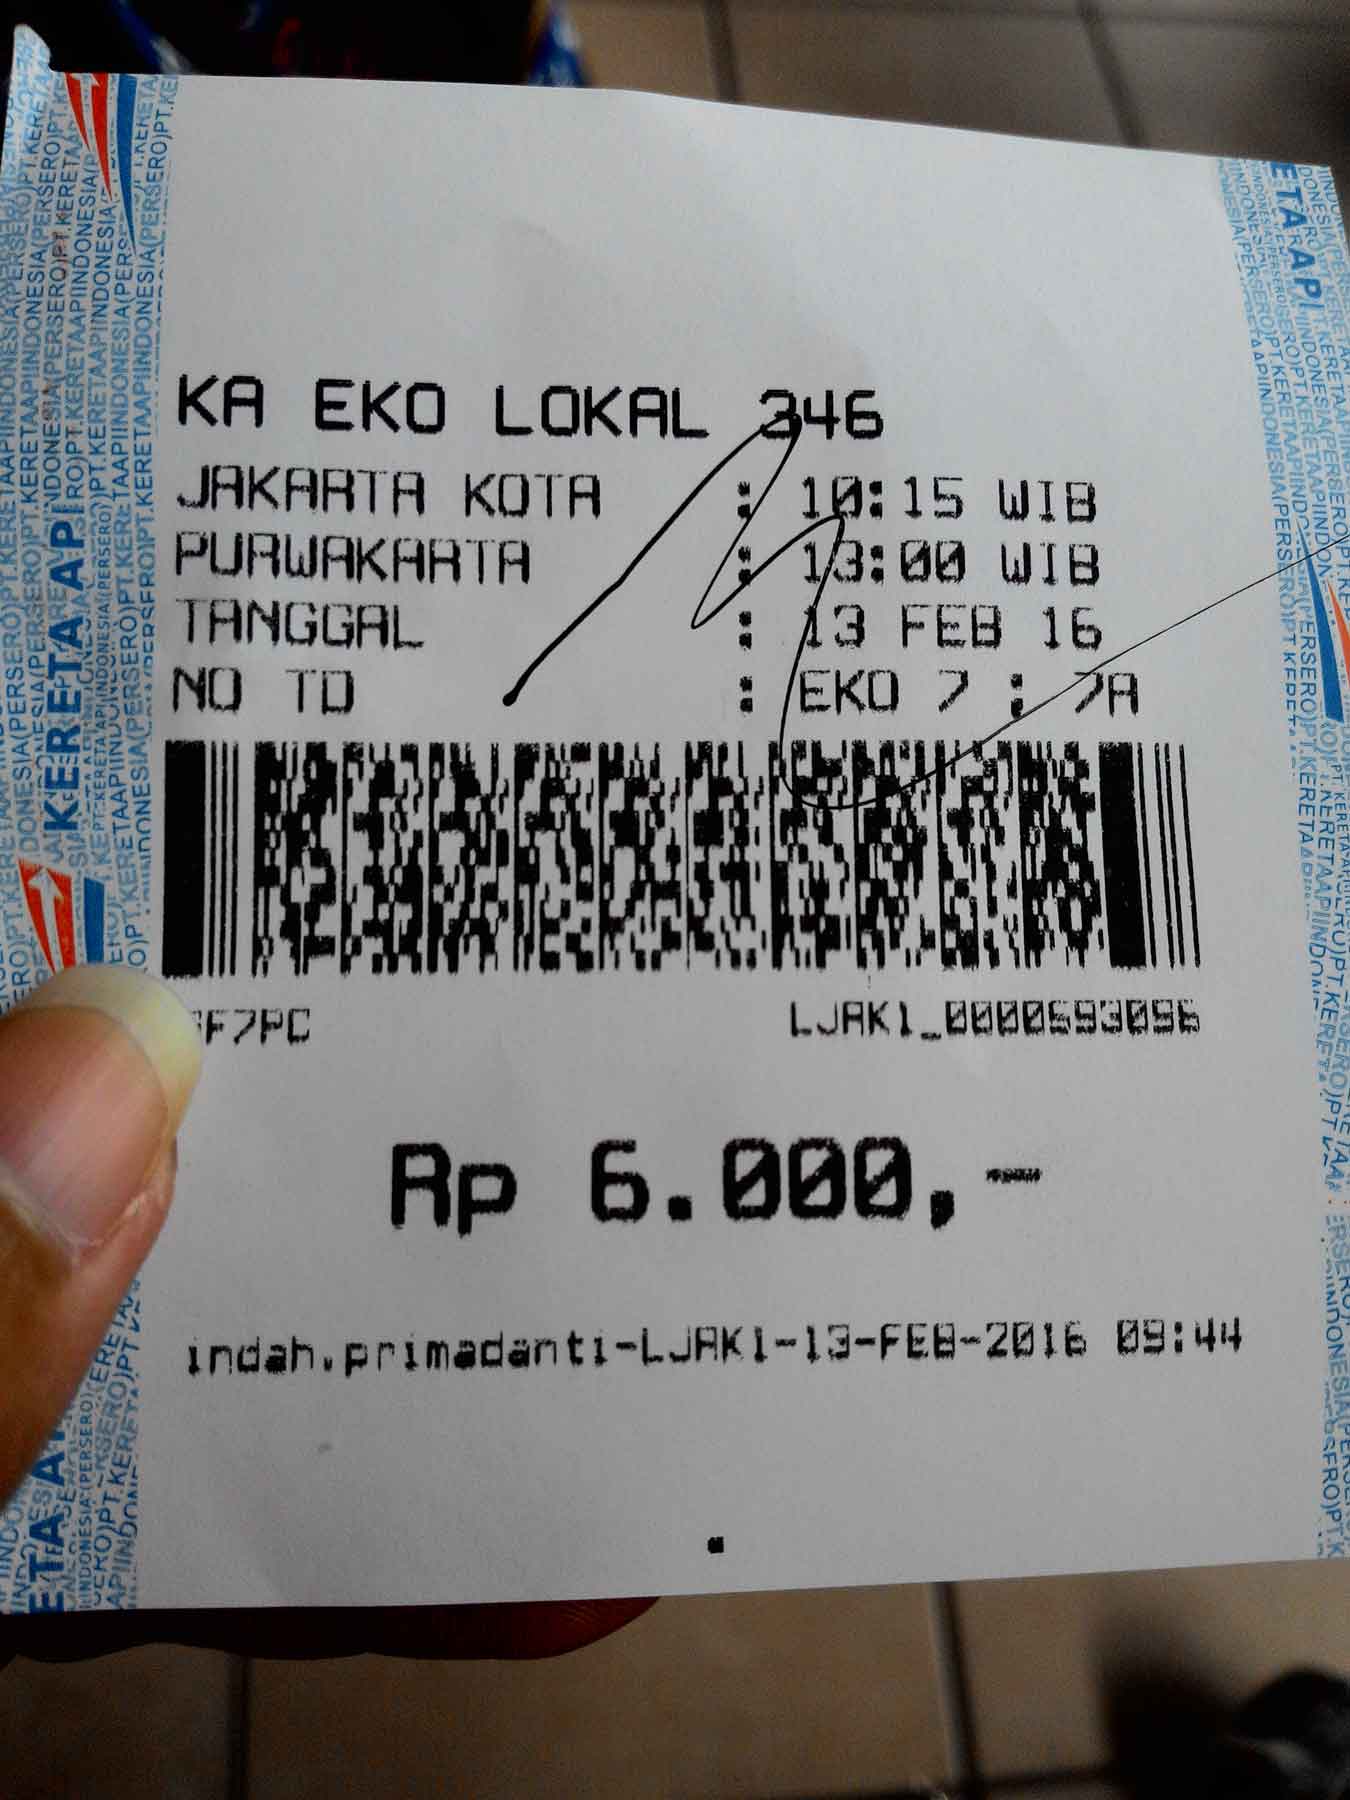 Tiket Kereta Jakarta-Purwakarta